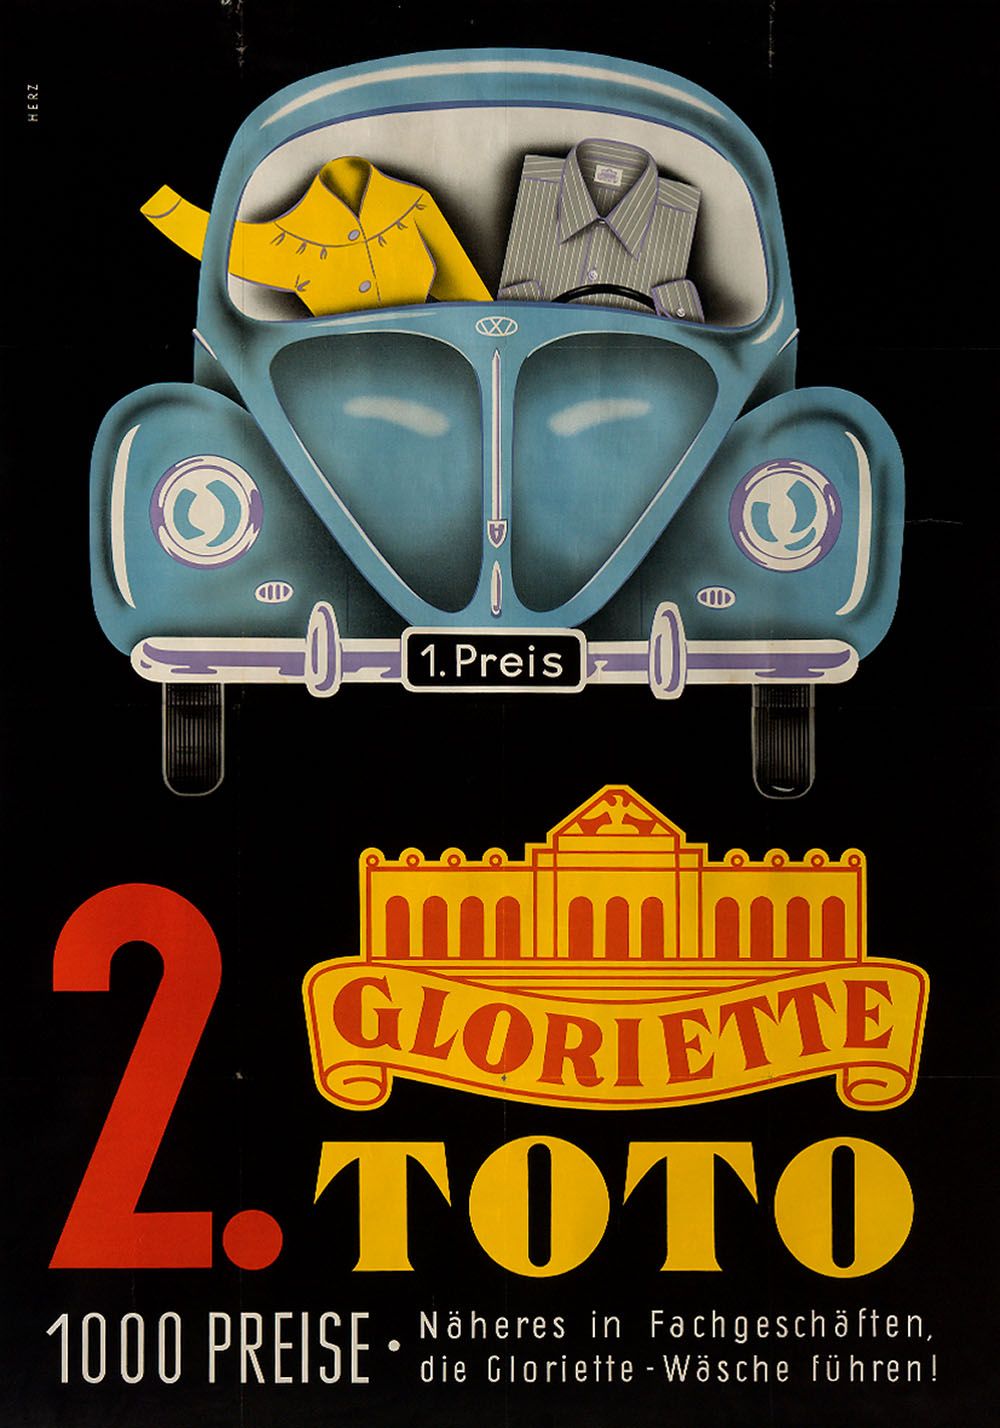 Plakat. – Volkswagen. – Gloriette, 海报。- 大众汽车公司。-Gloriette,2. Toto.1000美元的奖金。海报。彩&hellip;